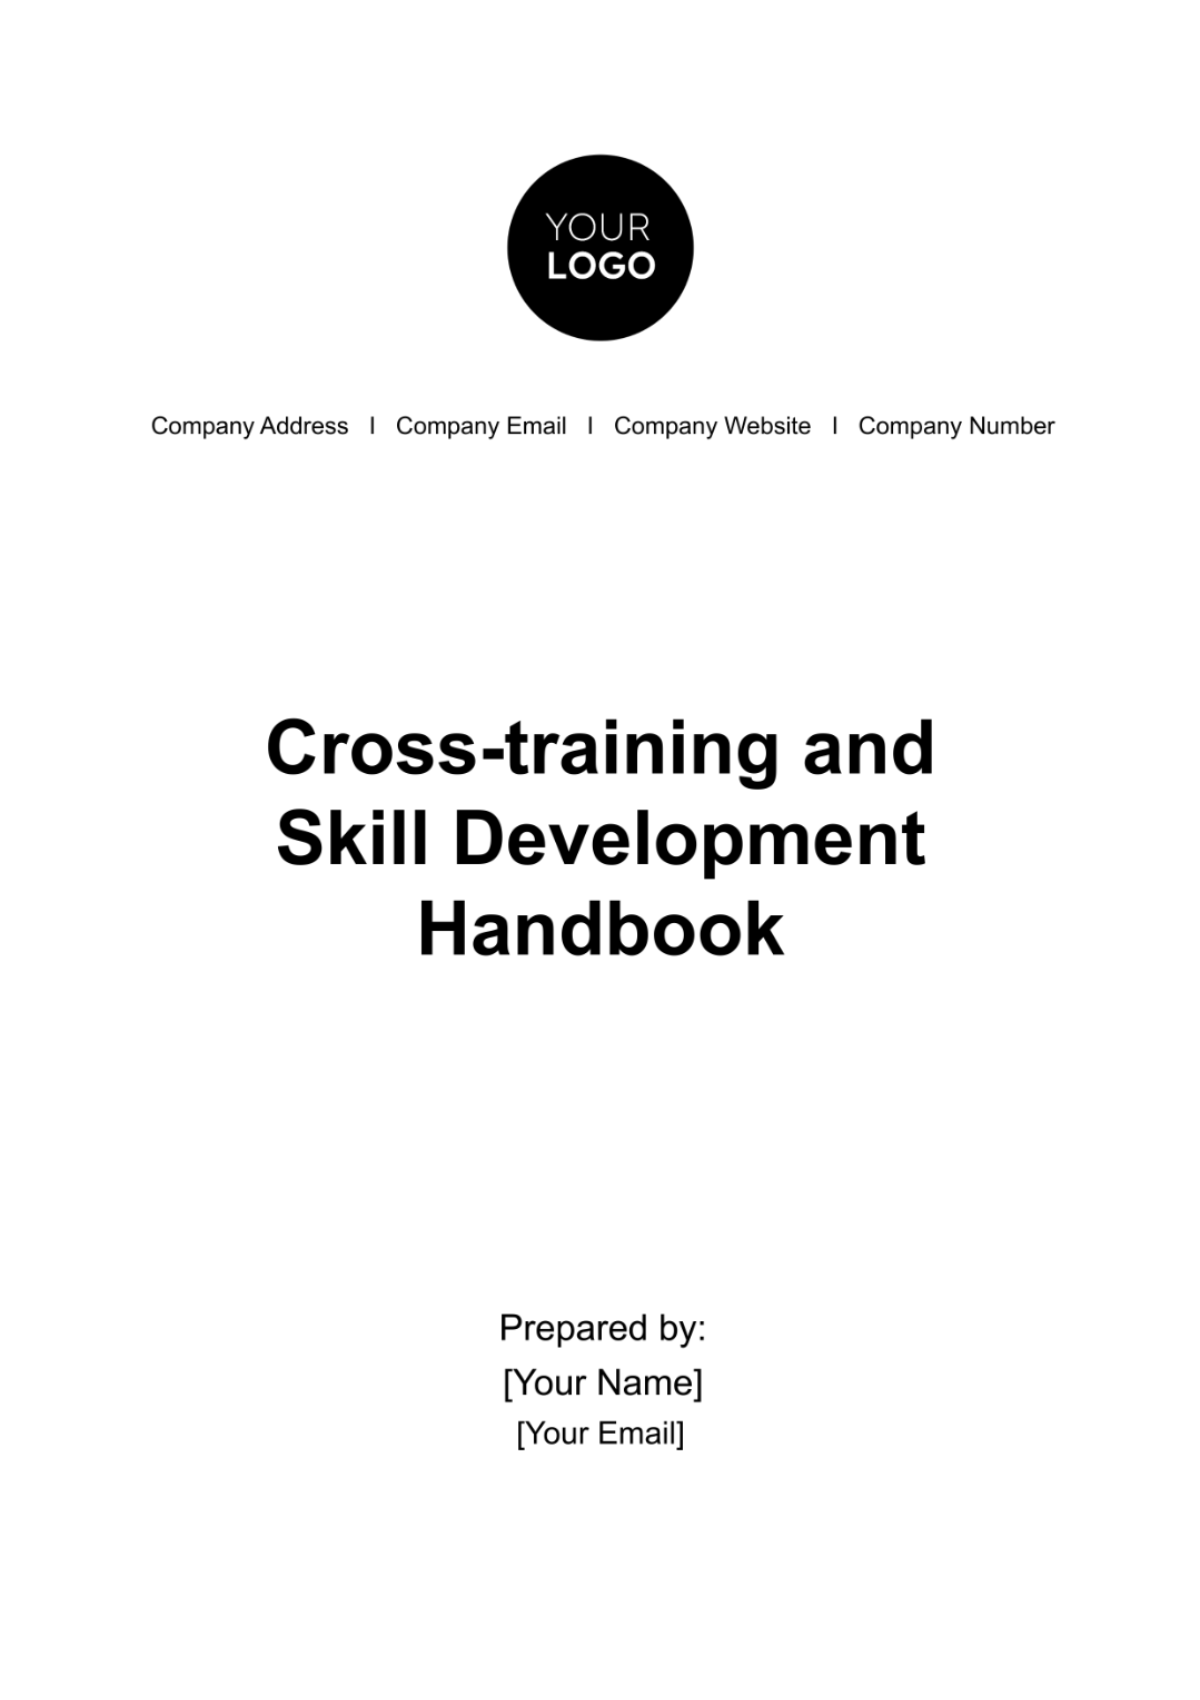 Free Cross-training and Skill Development Handbook HR Template